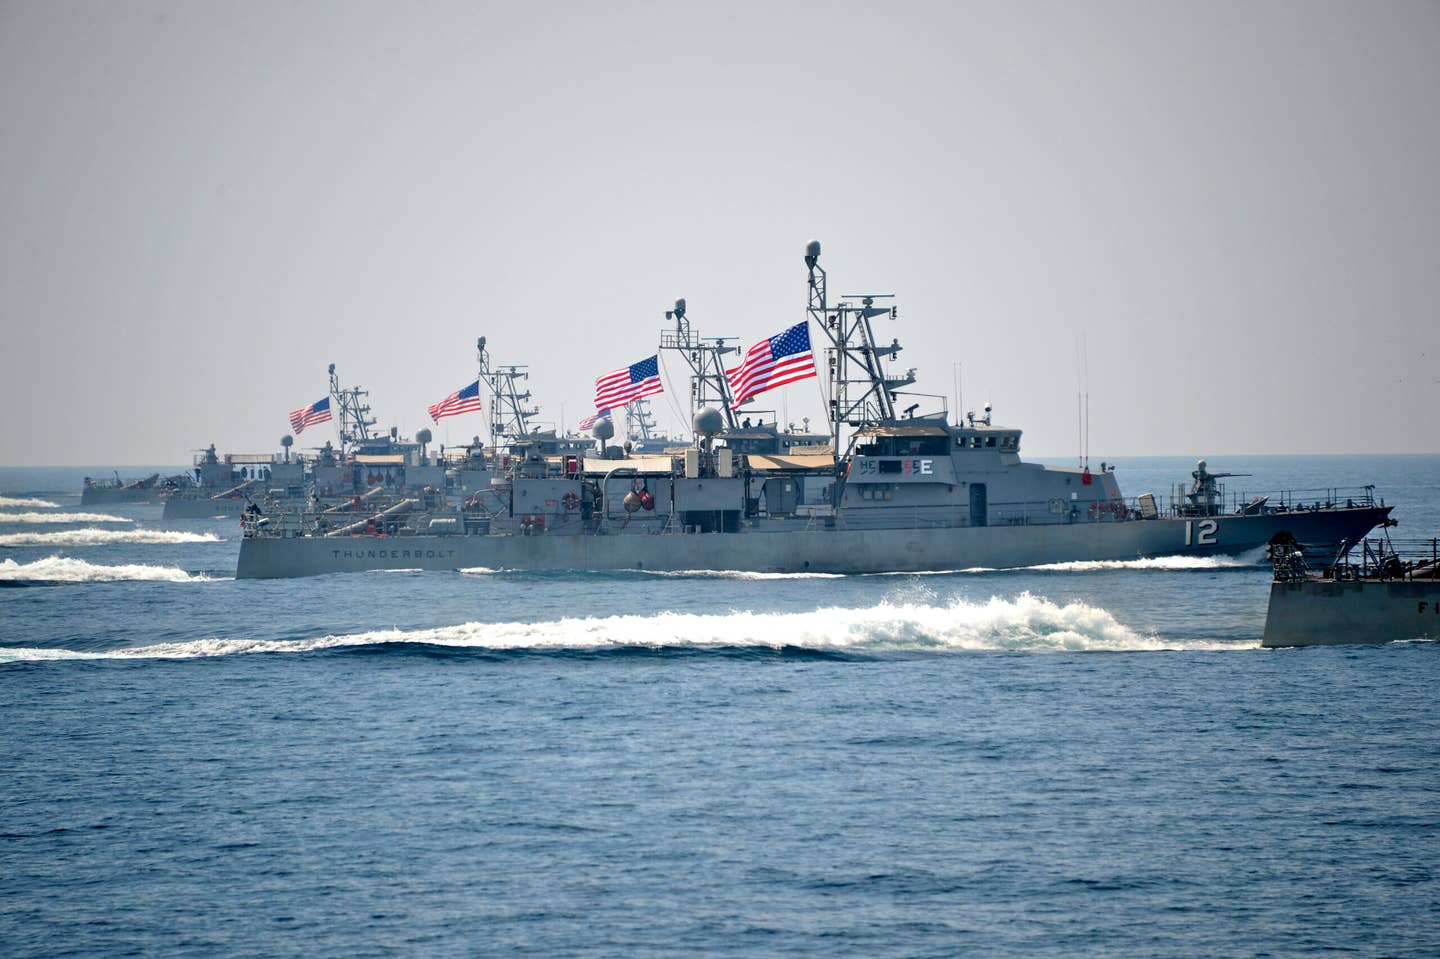 The coastal patrol ship USS <em>Thunderbolt</em> (PC 12) transits alongside other PCs during a formation exercise in 2014.&nbsp;<em>Credit: Mass Communication Specialist 2nd Class Taylor M. Smith/U.S. Navy</em>